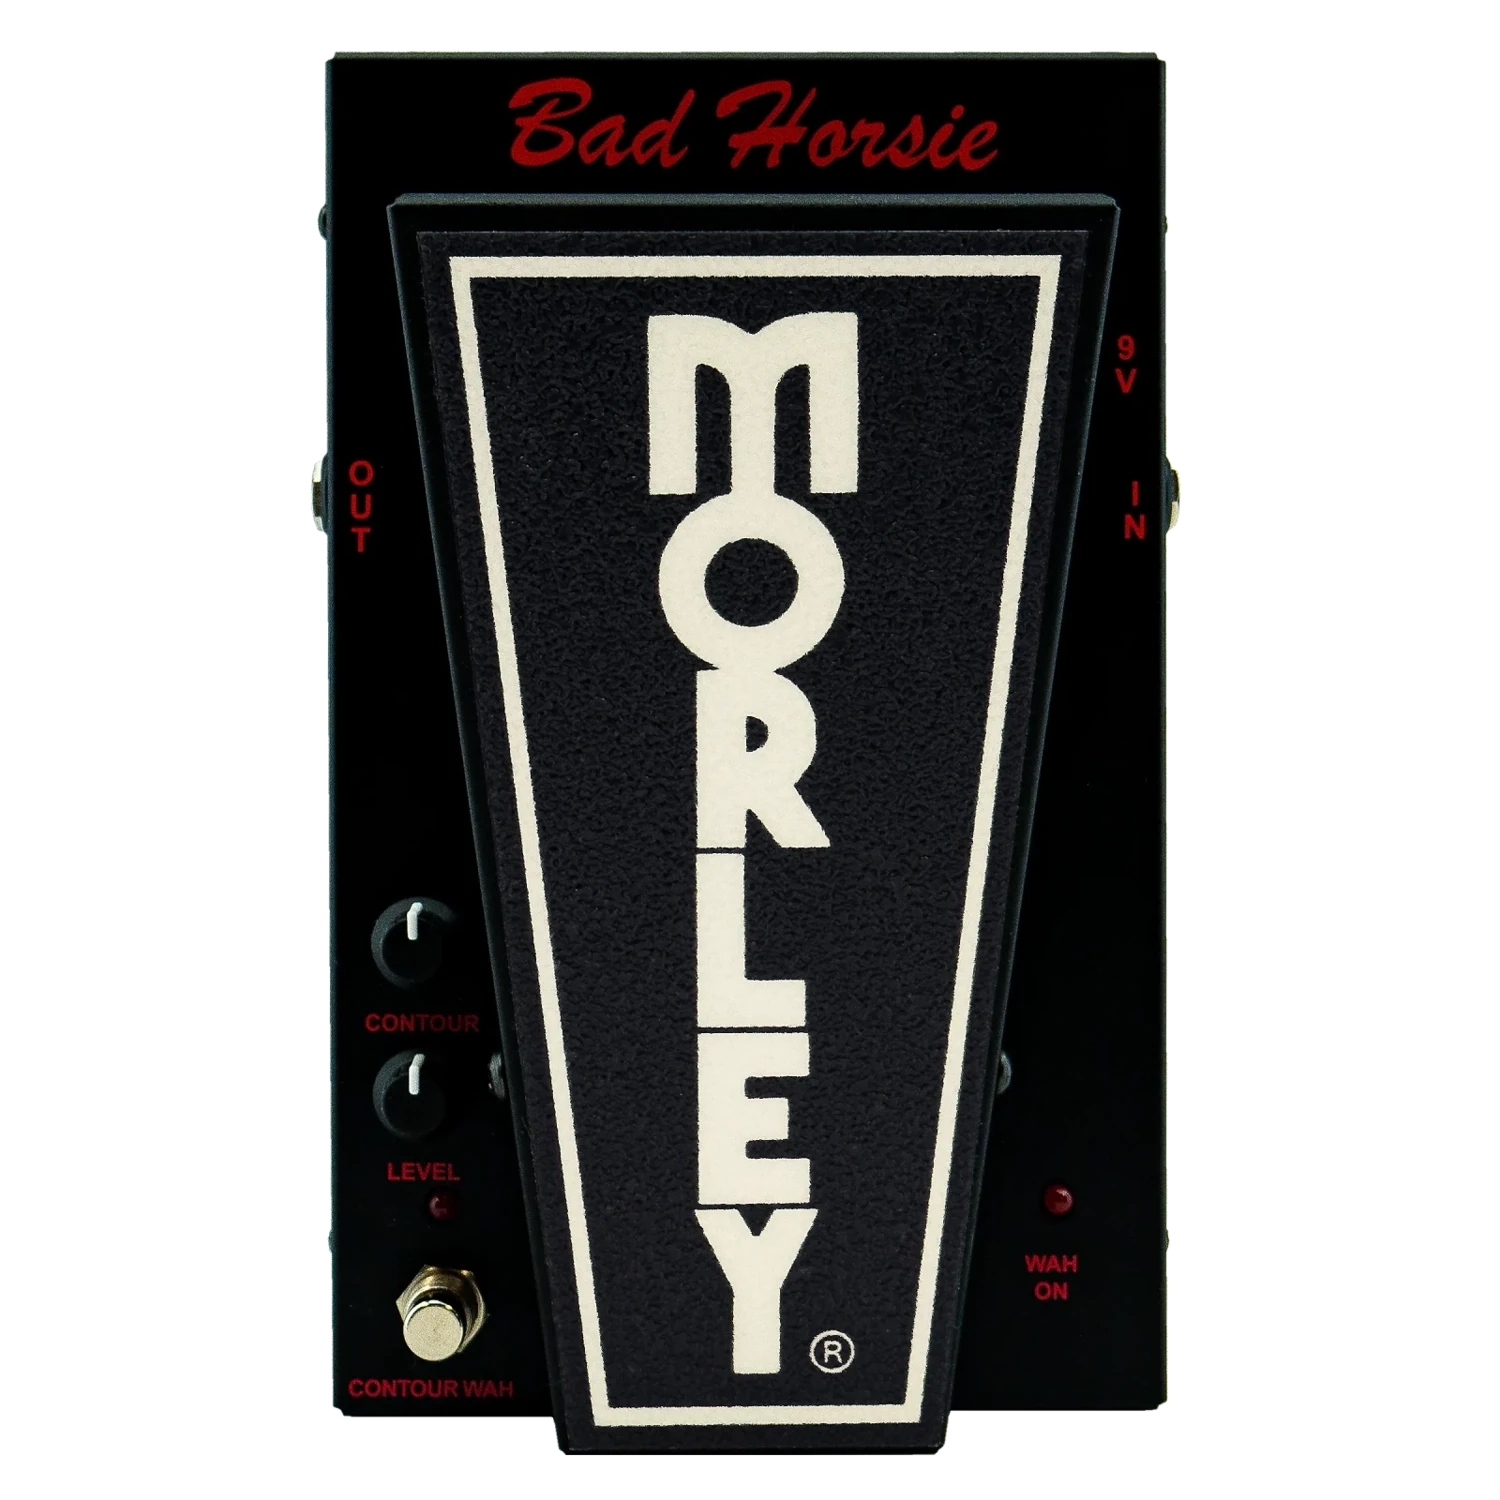 2022 Morley - Classic Bad Horsie Wah